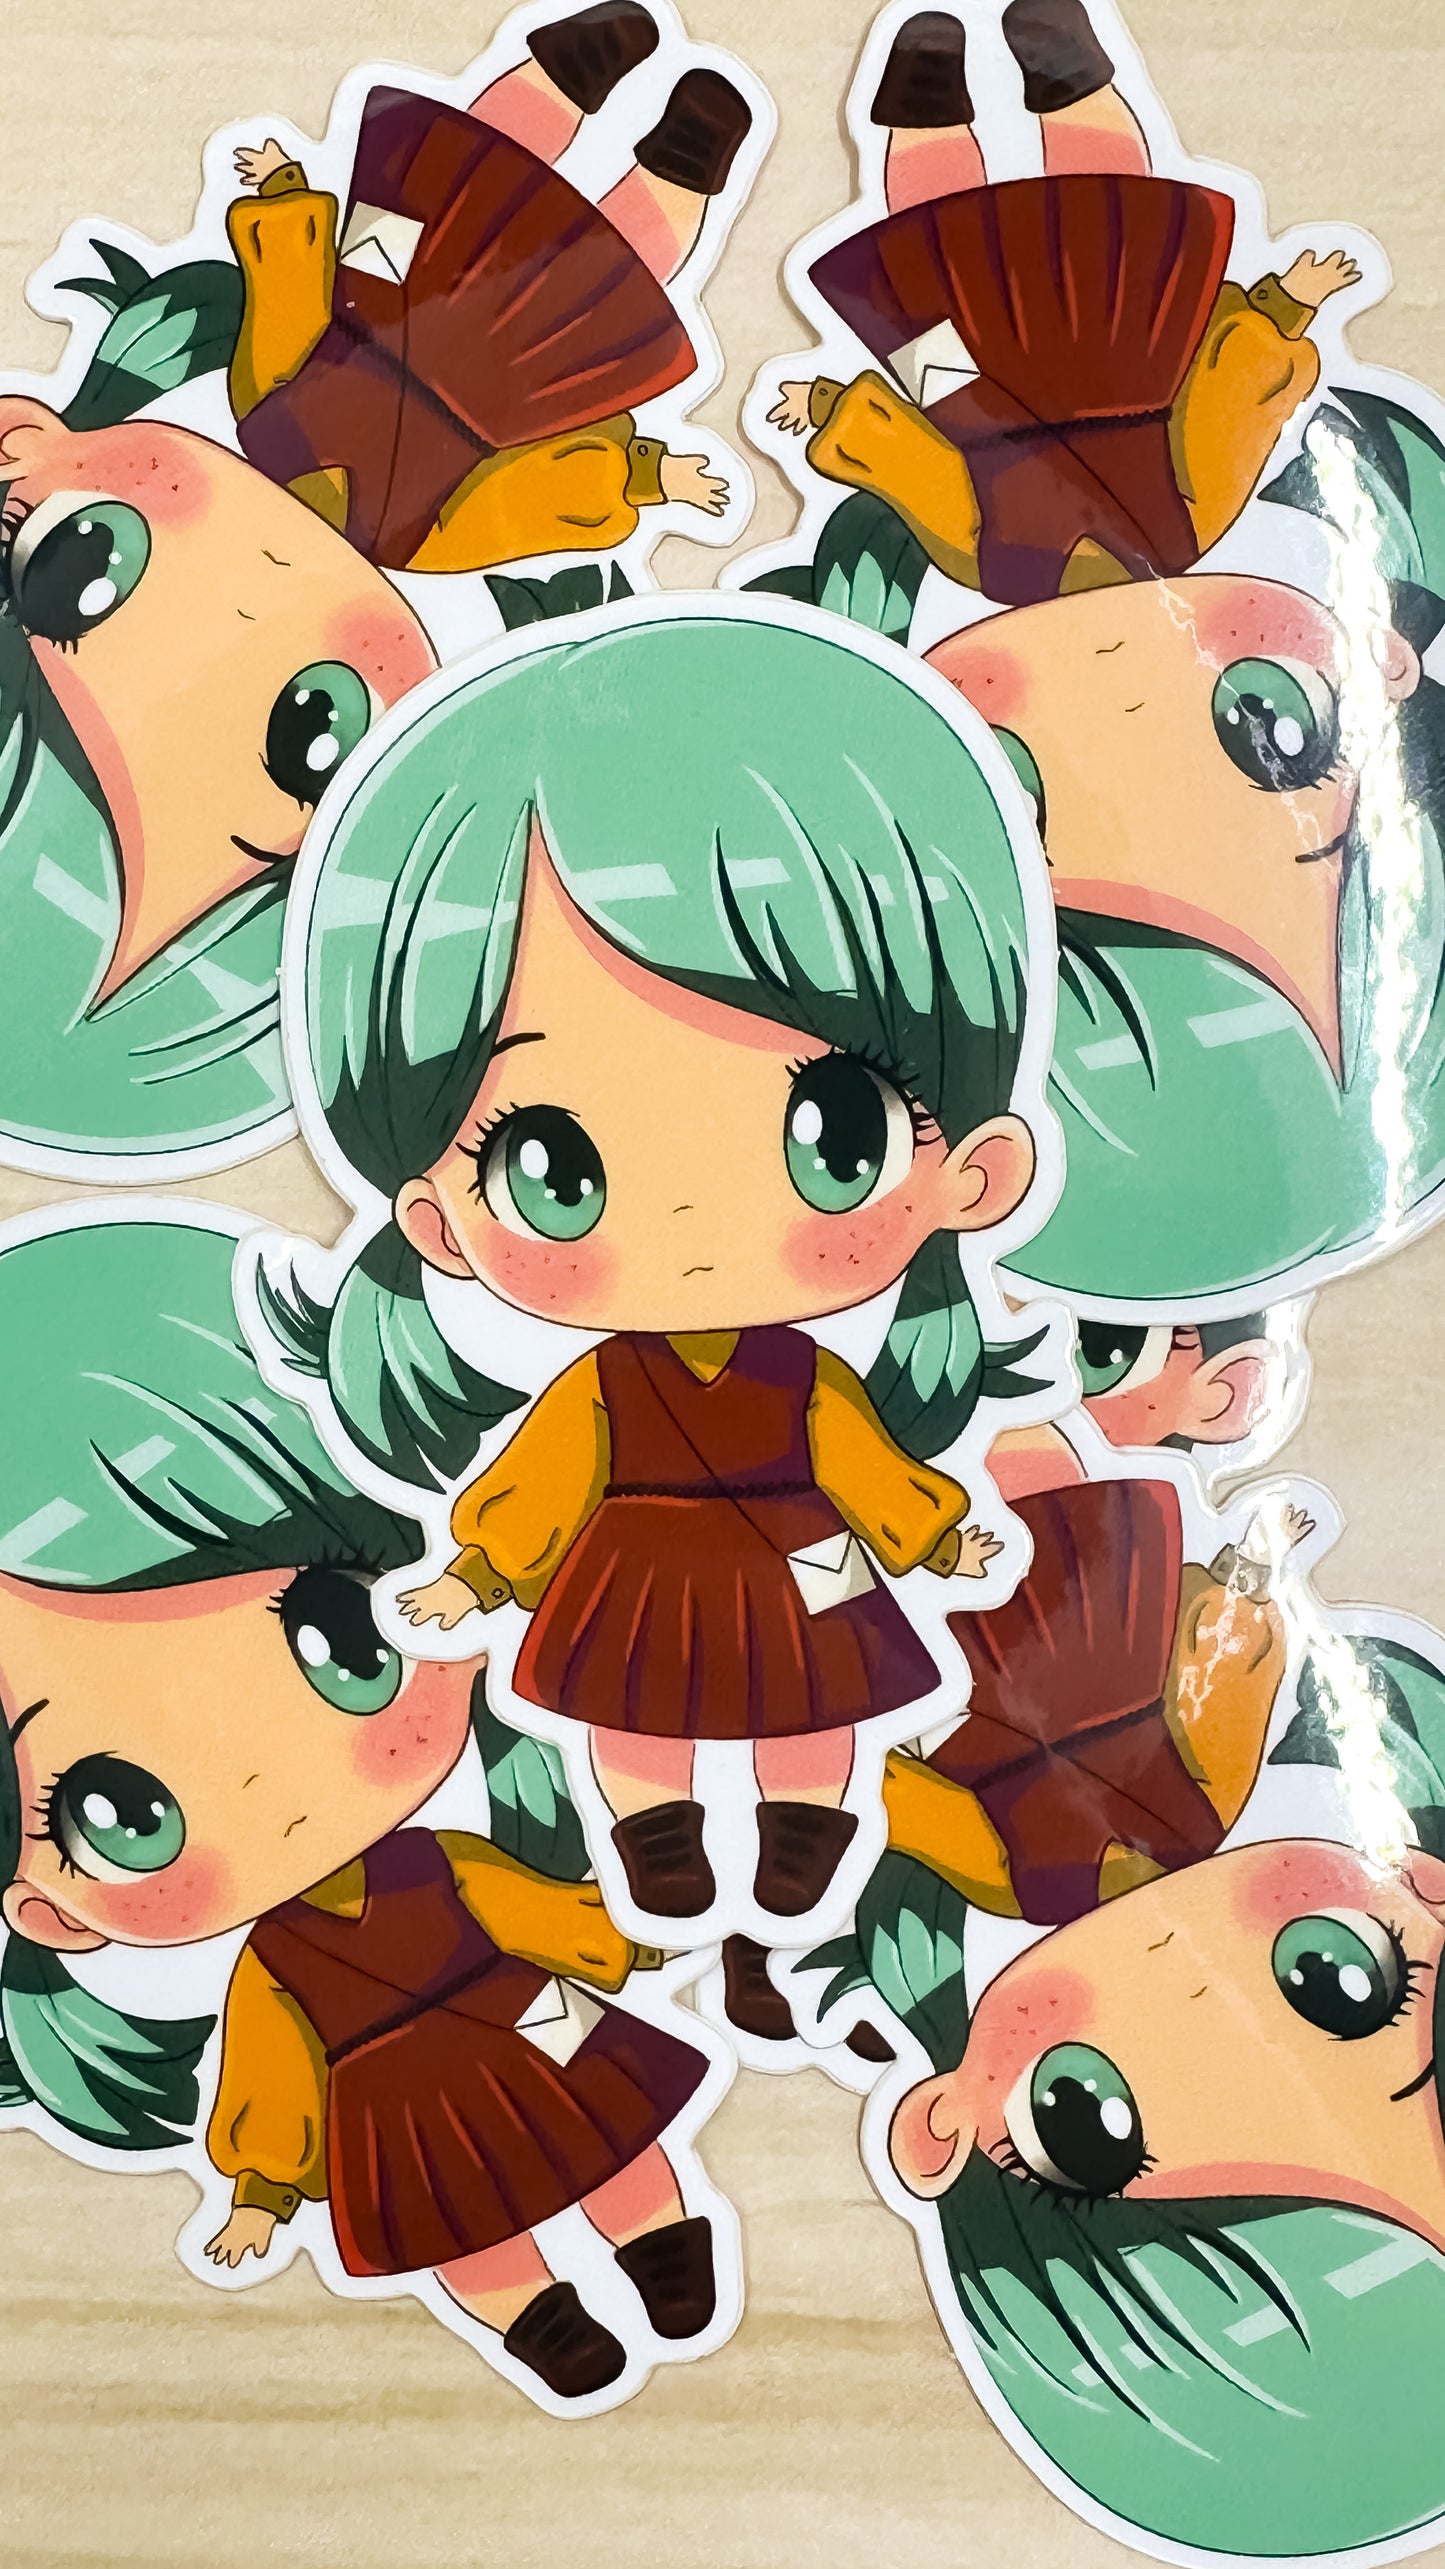 Cute Chibi Girl Sticker Anime Illustrated Vinyl Glossy 3 inch